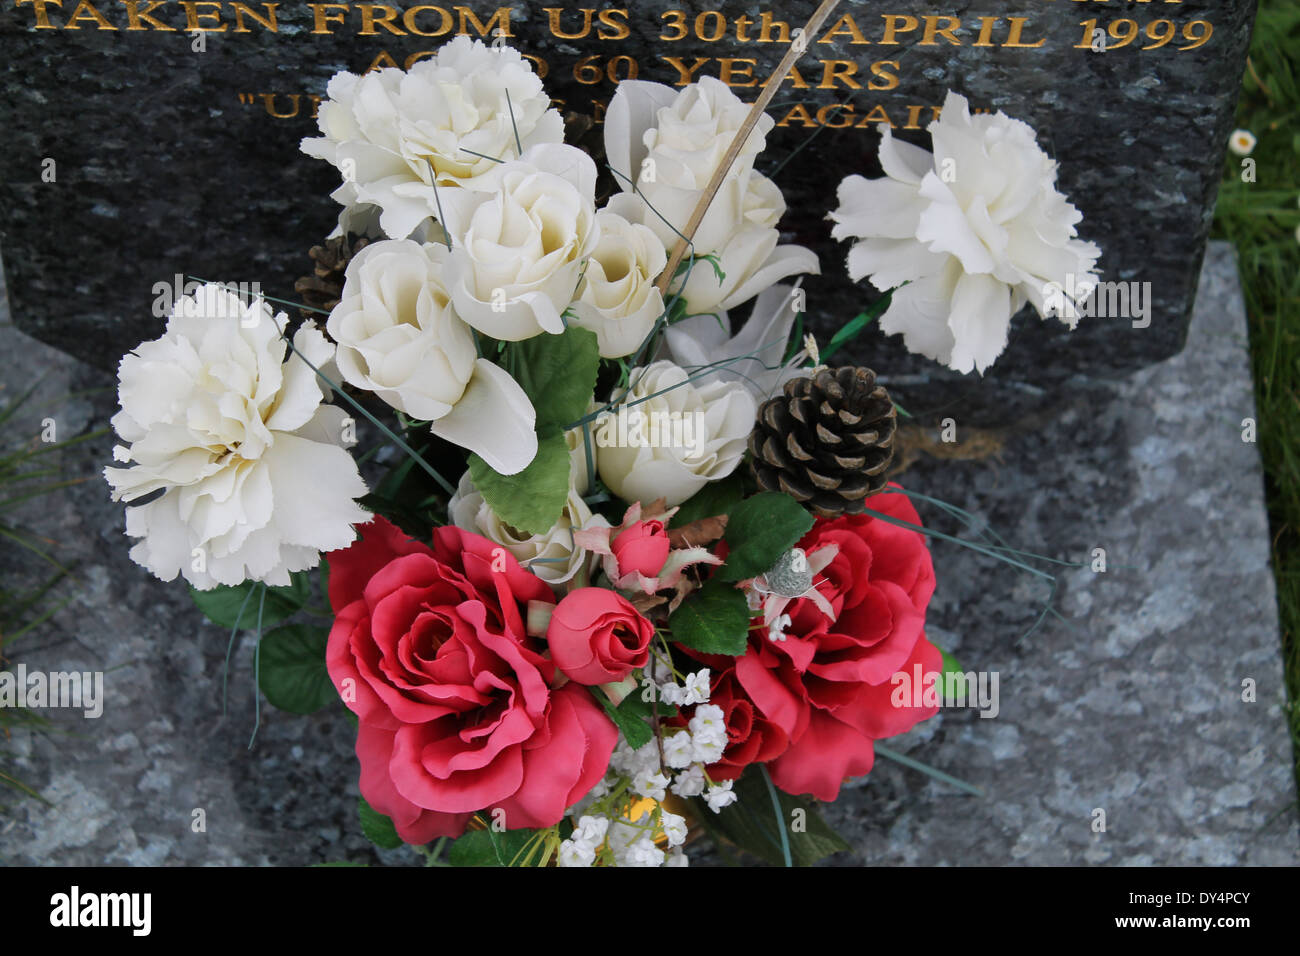 Esposa-Funeral Homenaje Floral Flores tumba Dayak basado en Seda Artificial 